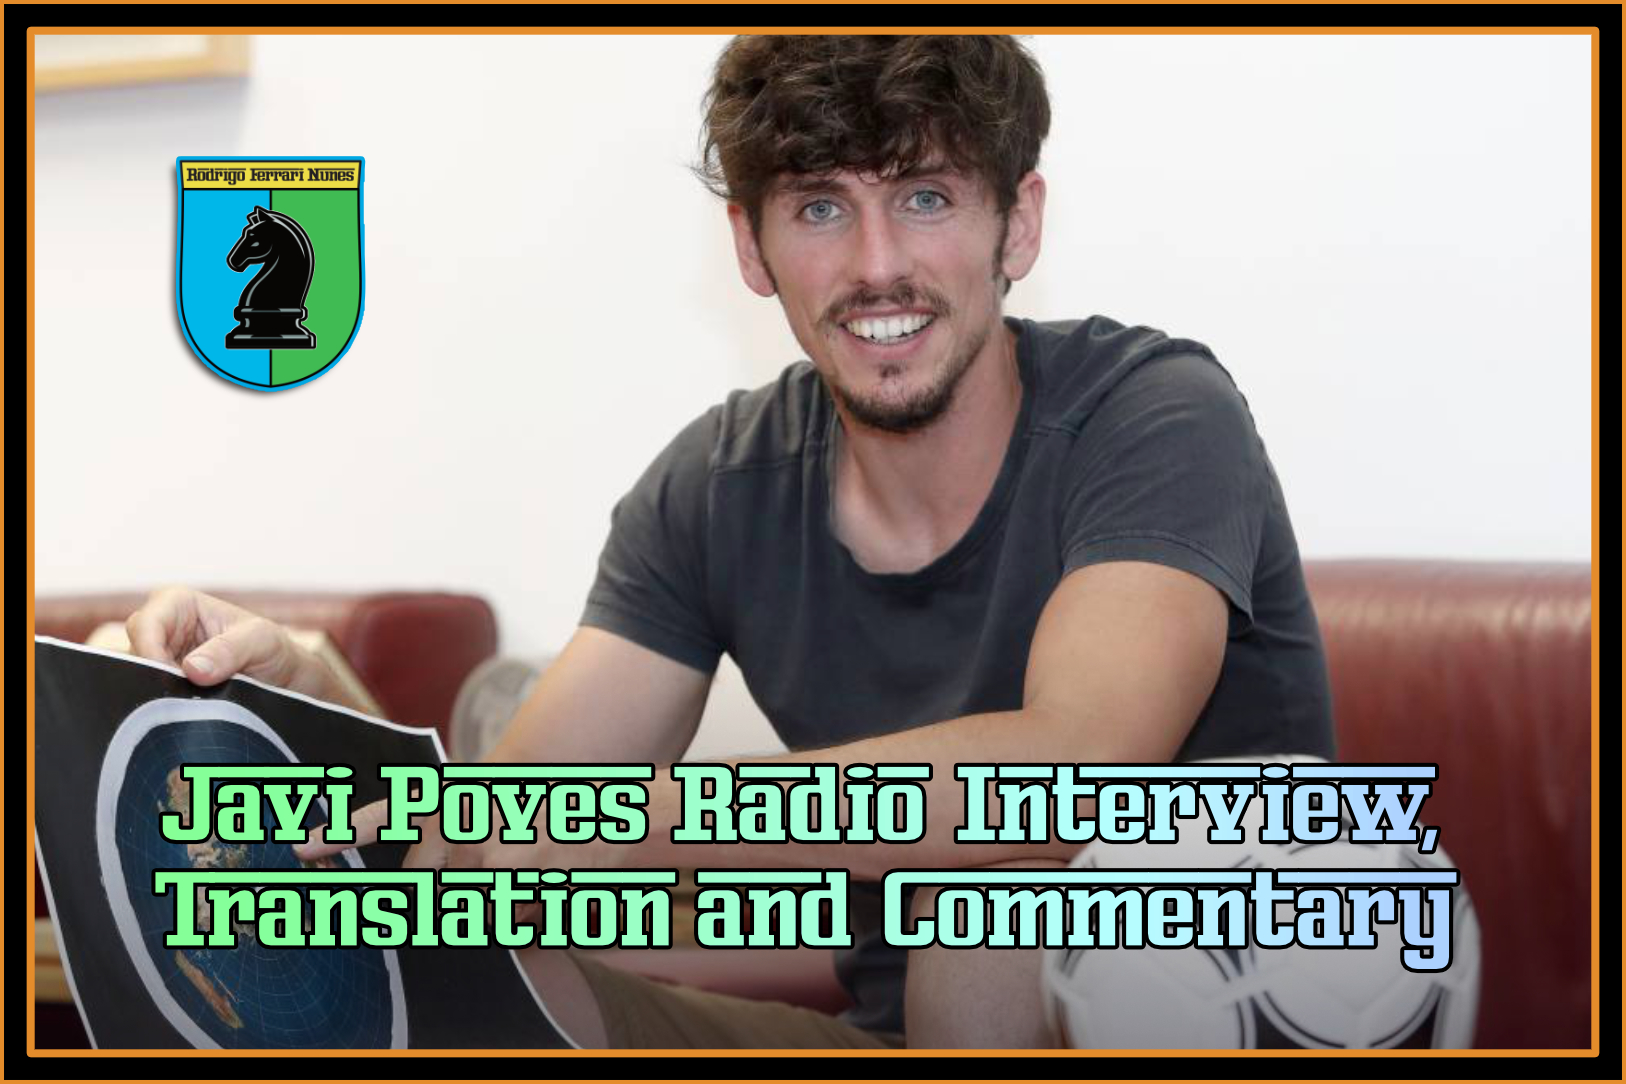 Flat Earth Football Club’s Founder Javi Poves Radio Interview